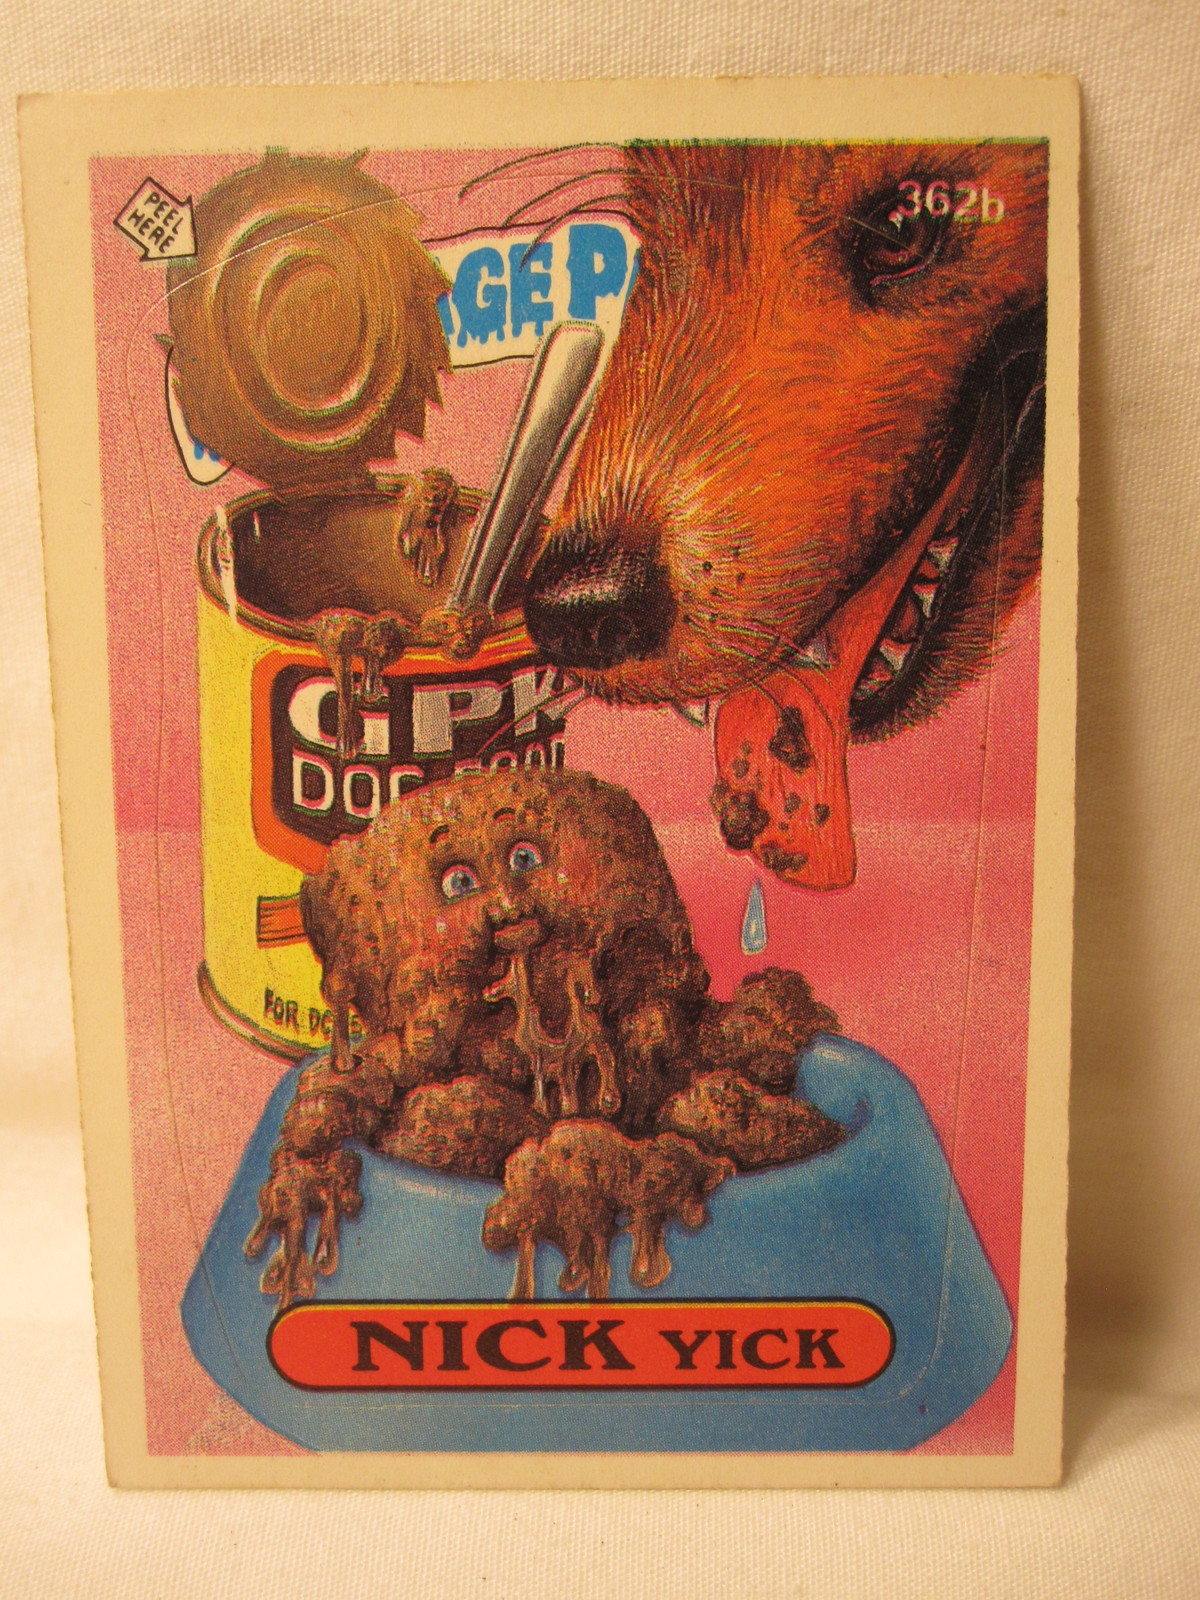 Primary image for 1987 Garbage Pail Kids trading card #362b: Nick Yick